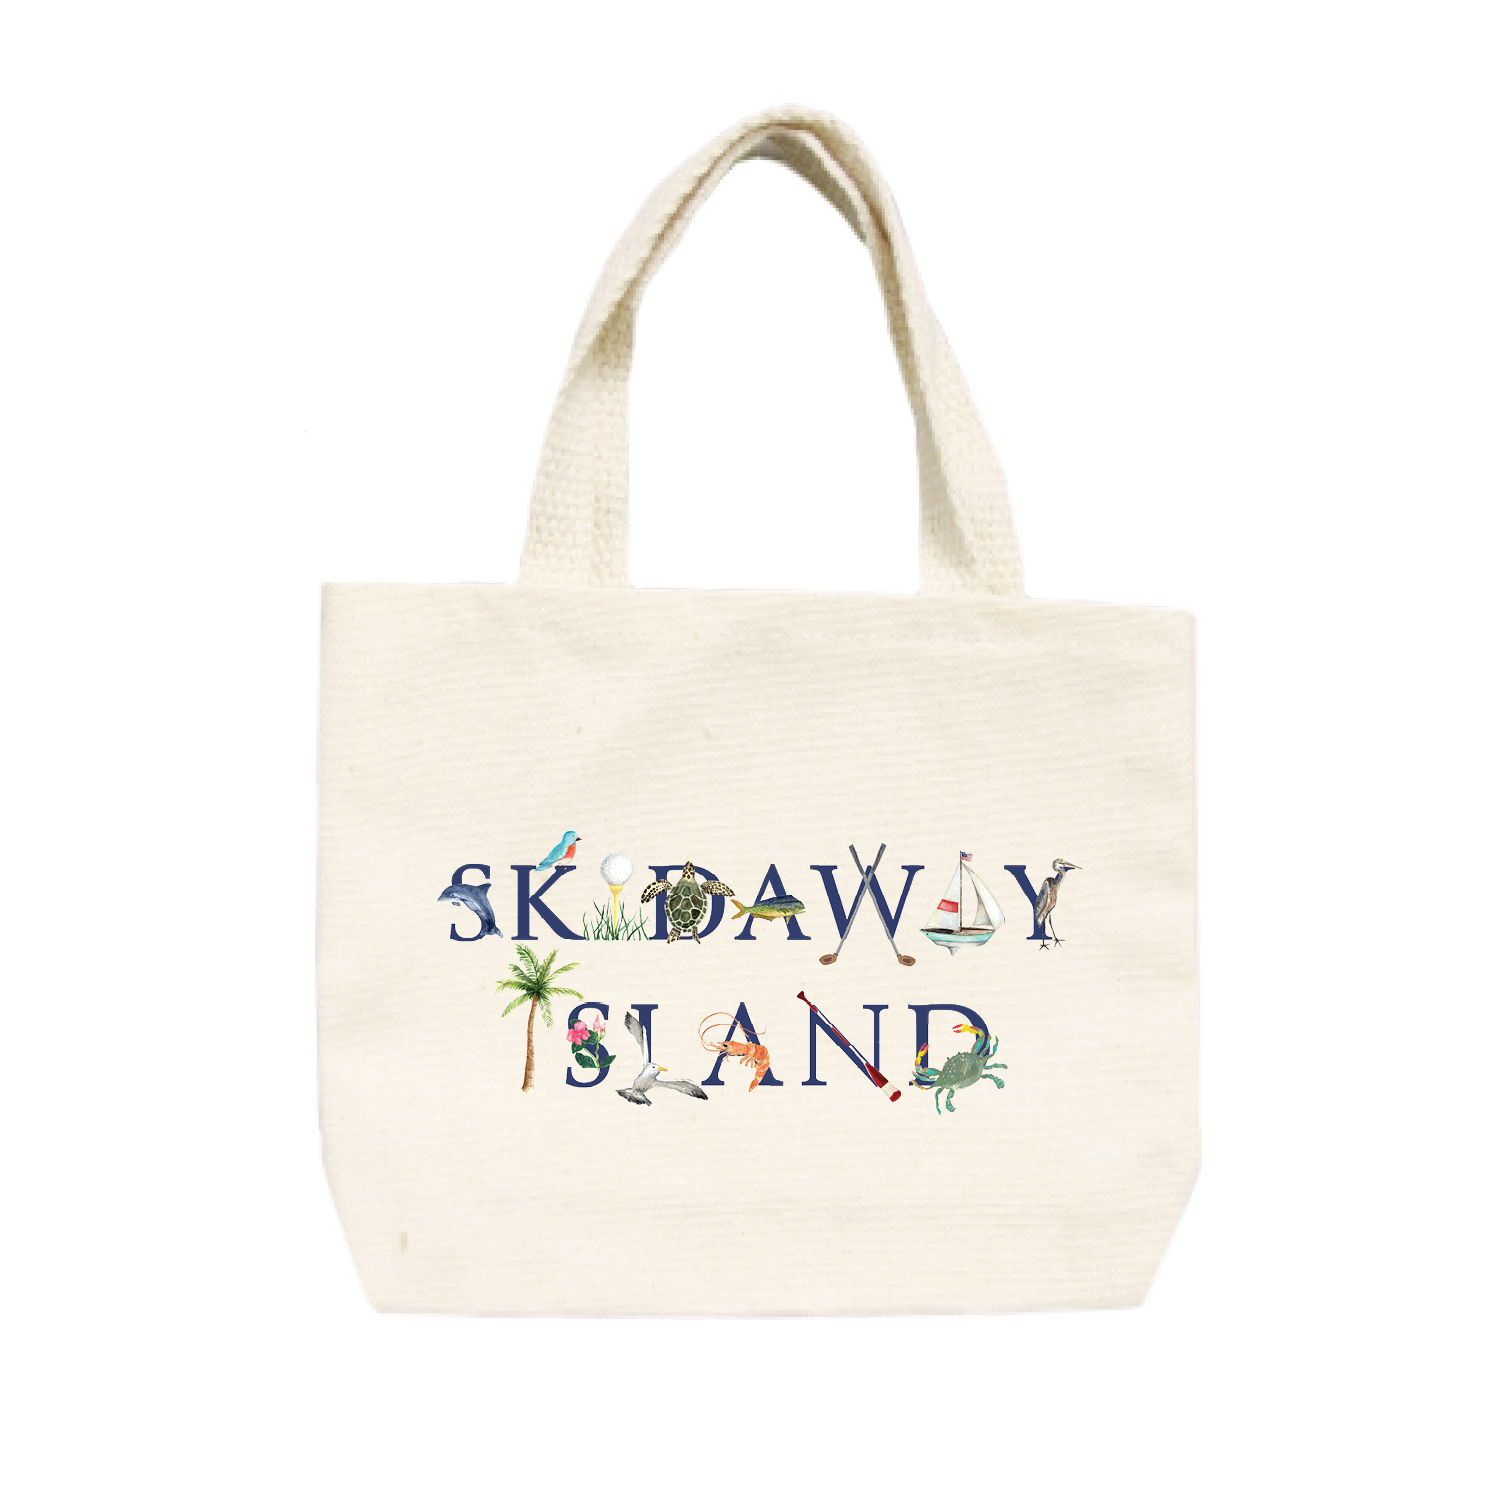 Skidaway Island small tote